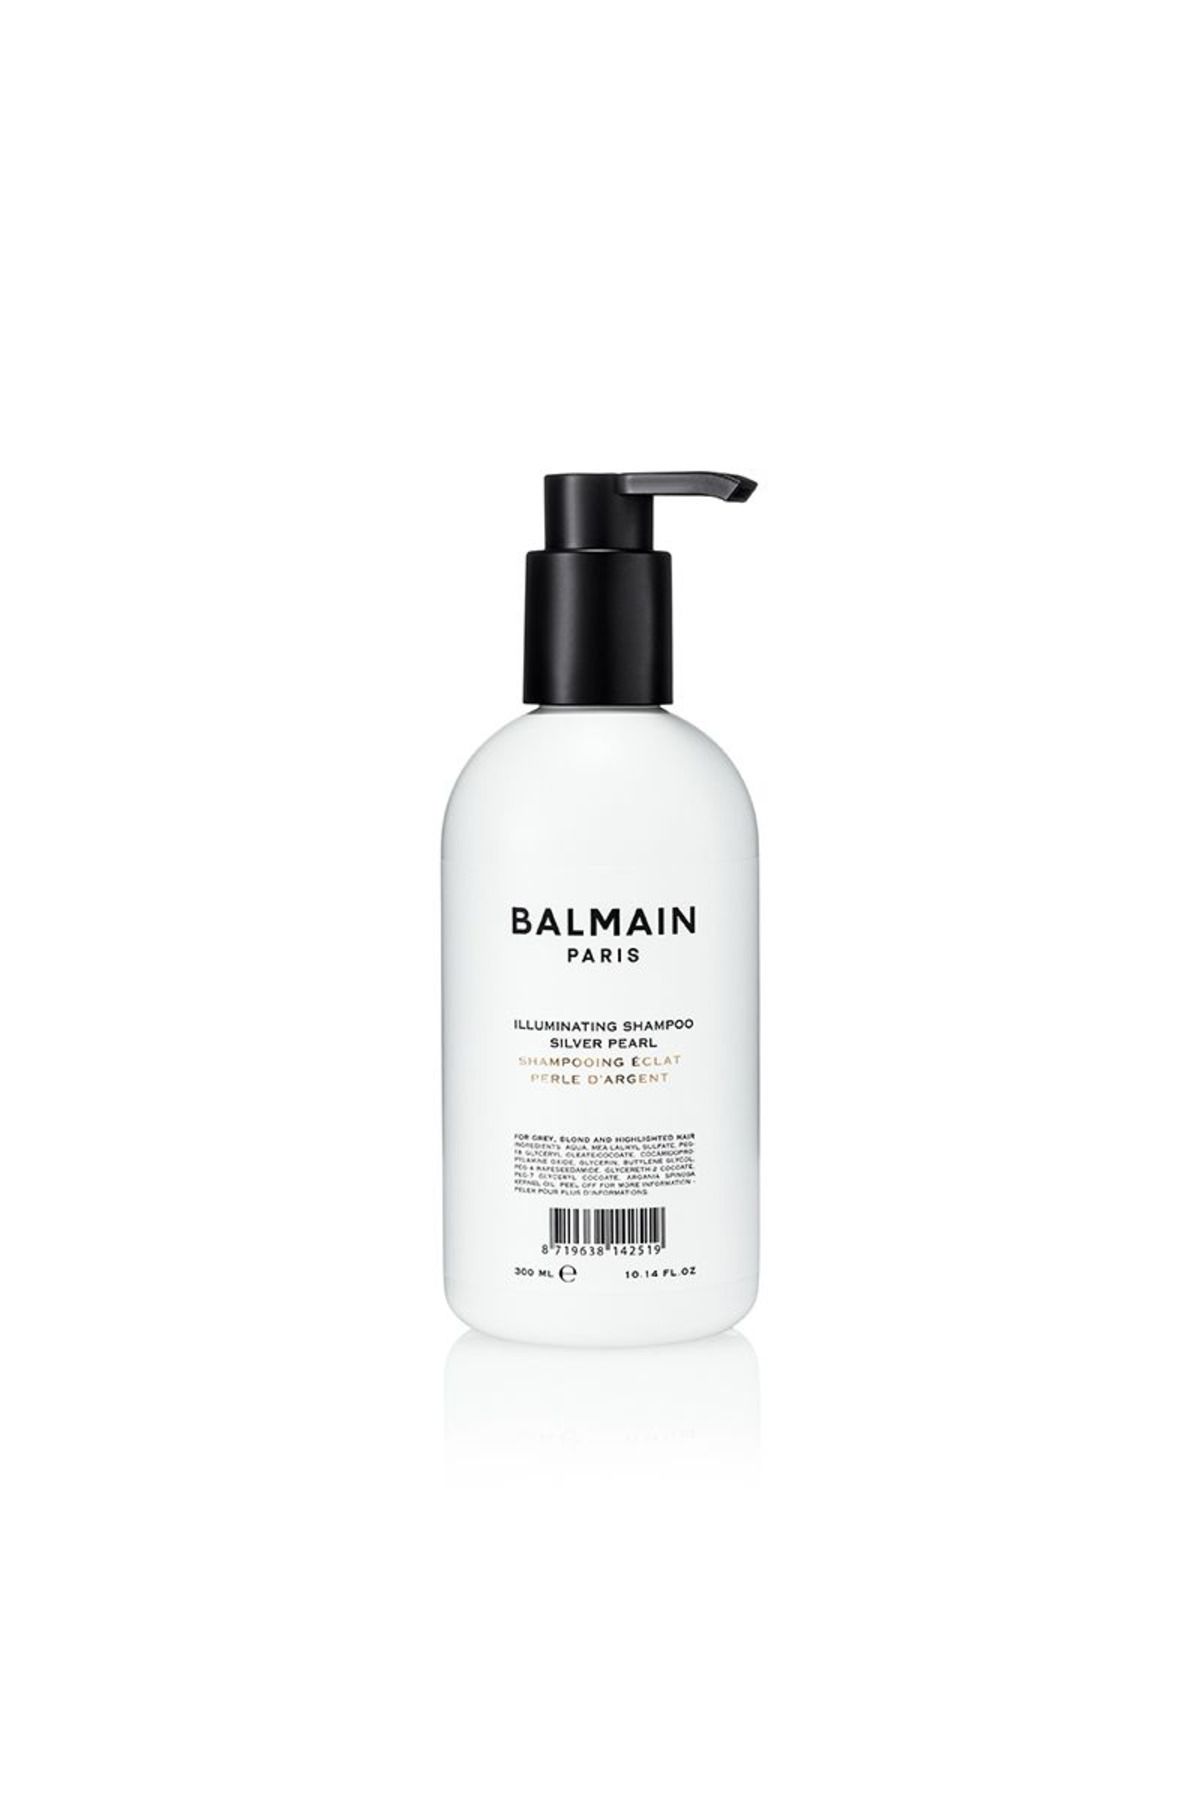 BALMAIN Illuminating Shampoo Silver Pearl 300ml